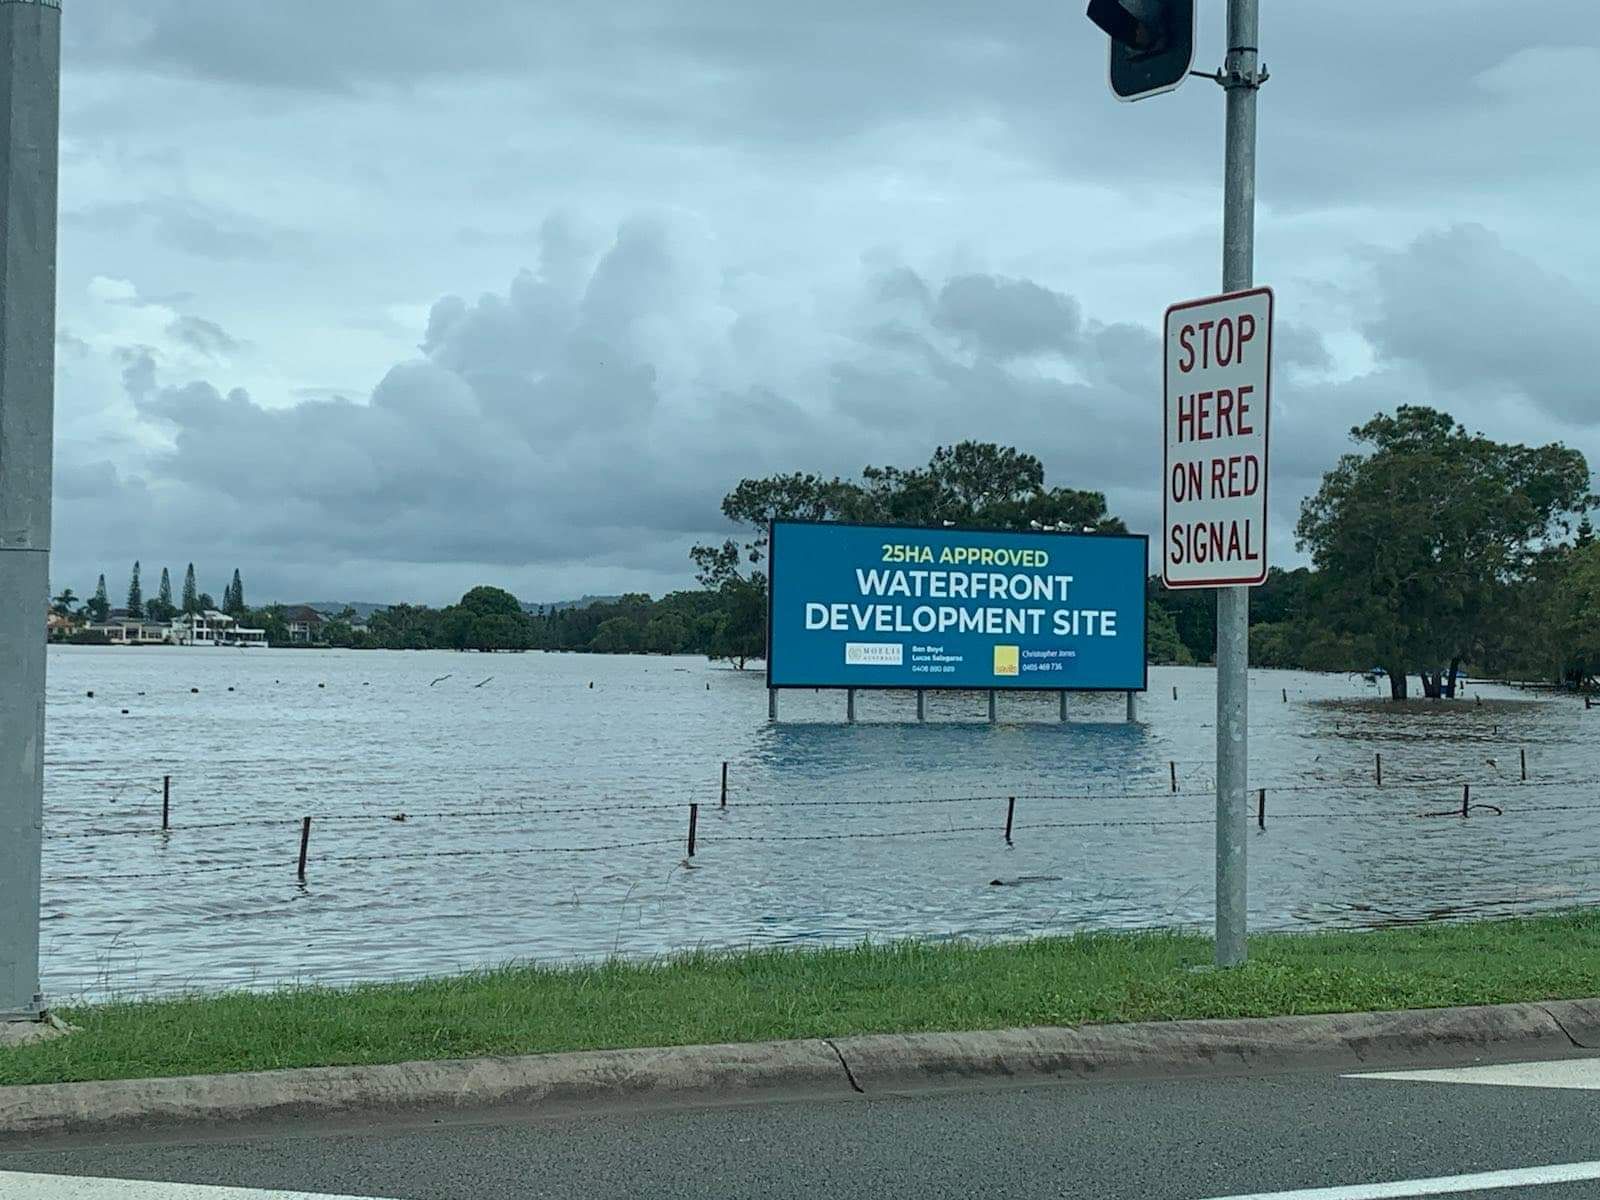 FYI Australia is flooding again.